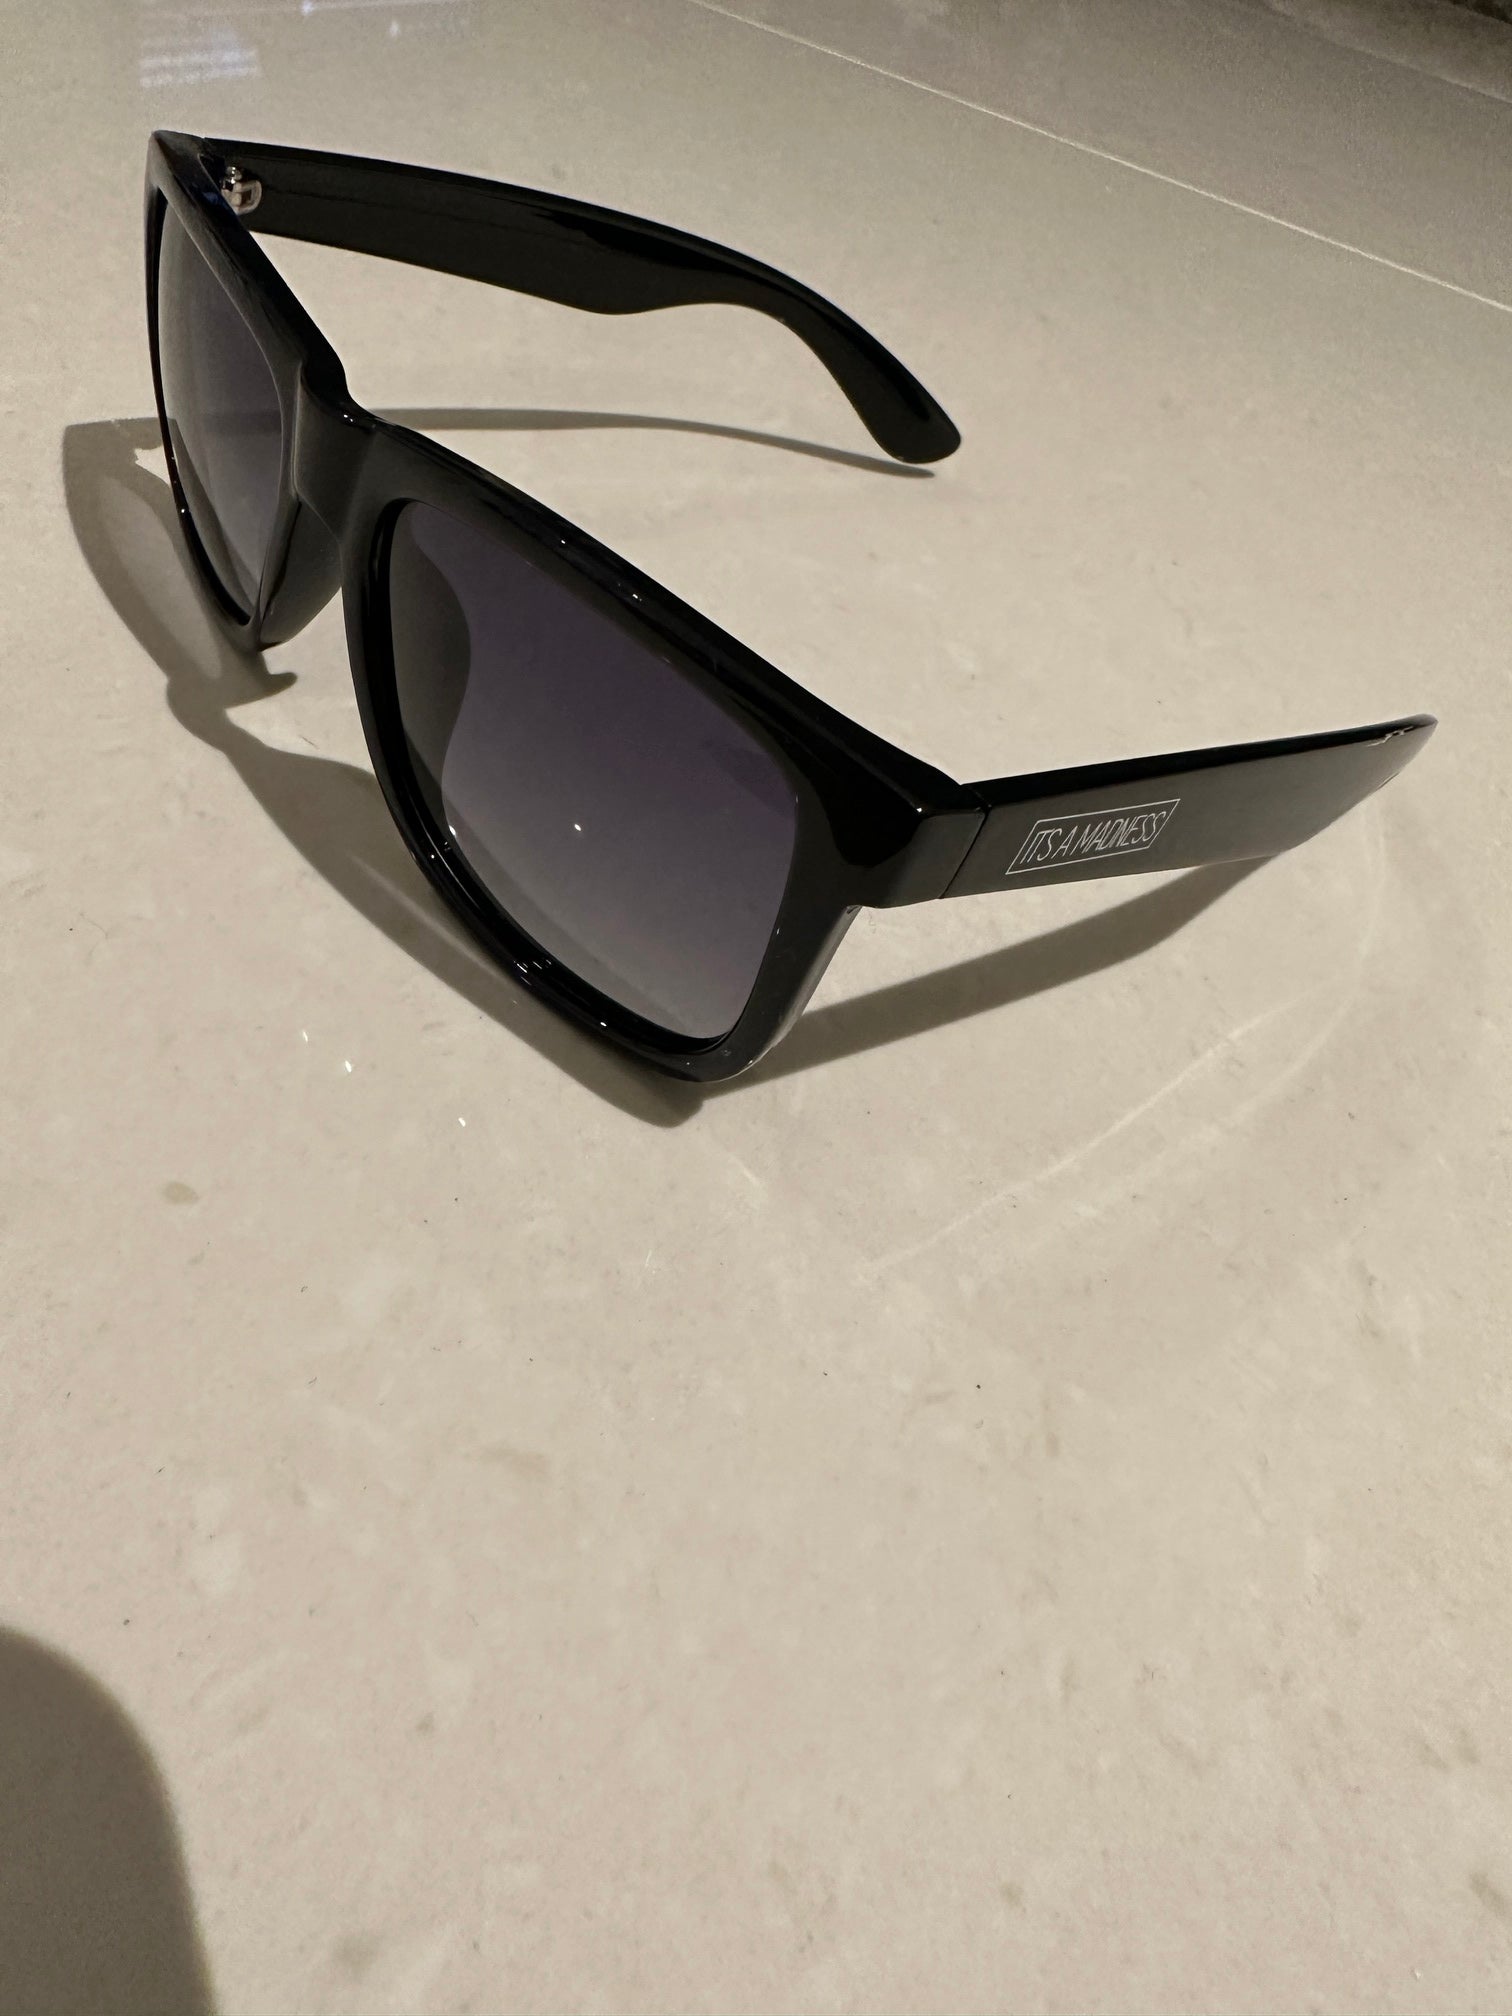 It's a madness sunglasses - Black